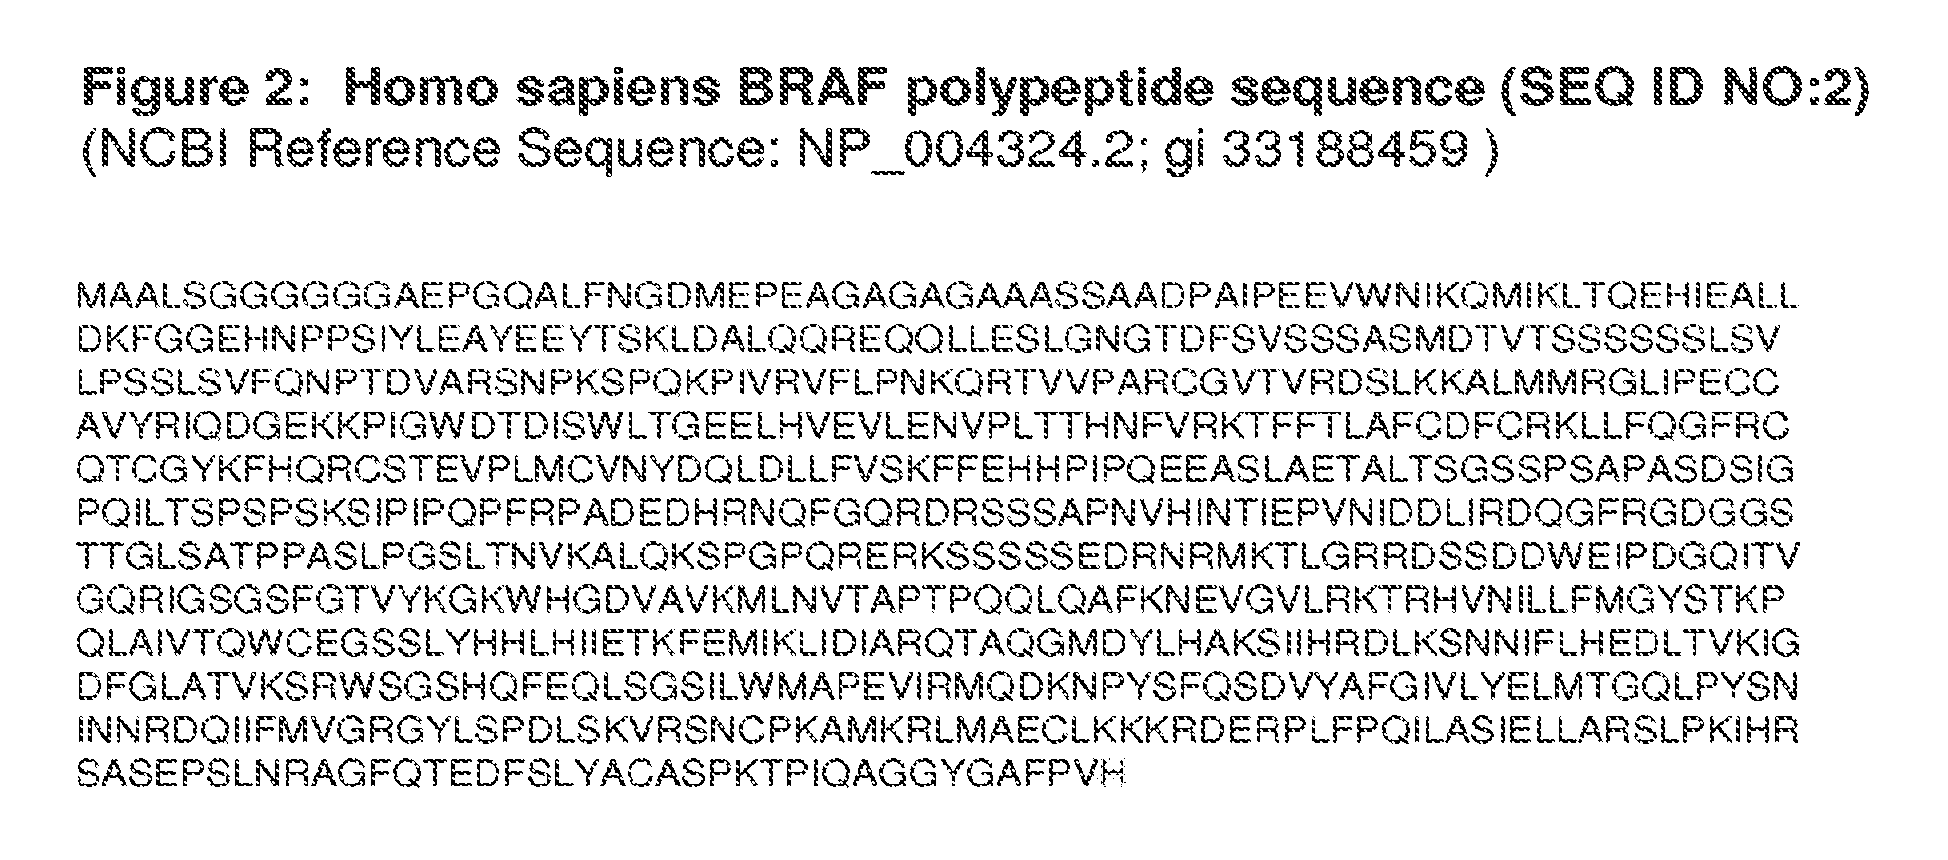 BRAF Mutations Conferring Resistance to BRAF Inhibitors